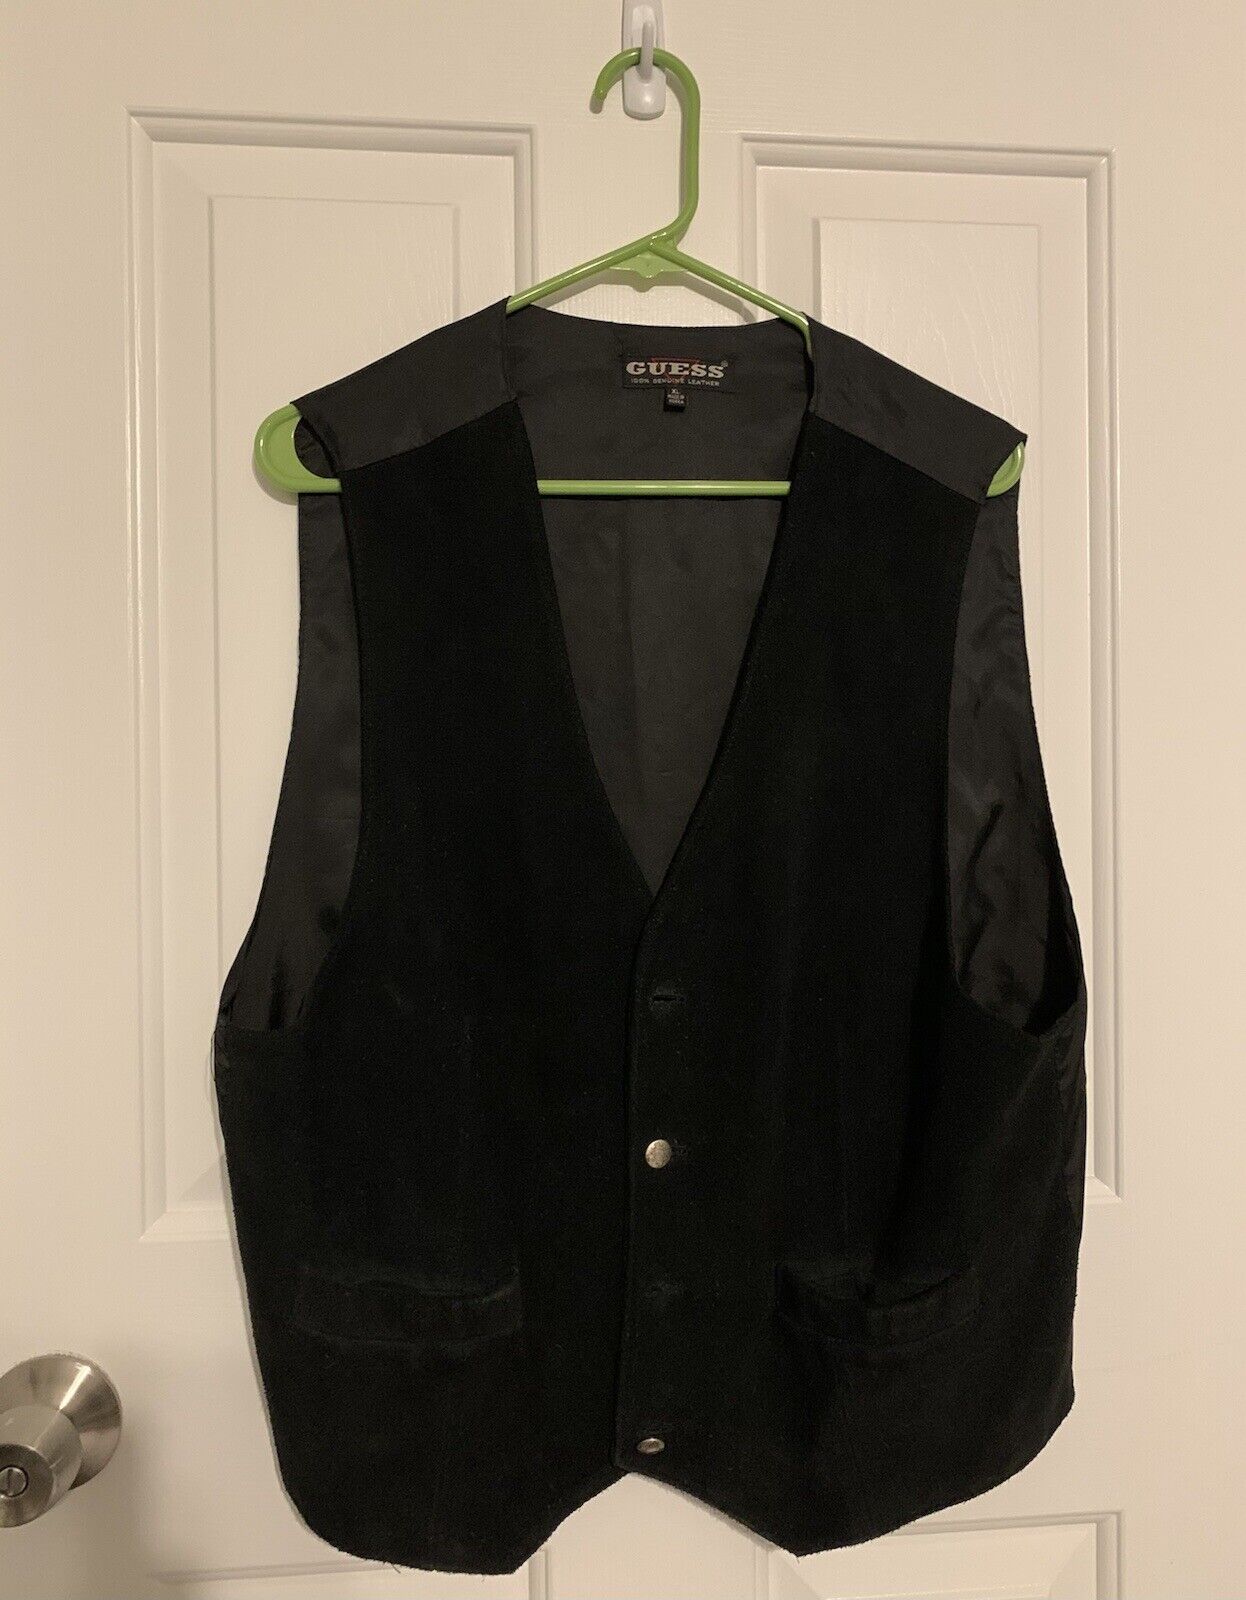 Vintage 1992 Men's GUESS Genuine Leather Vest Size XL (Missing 